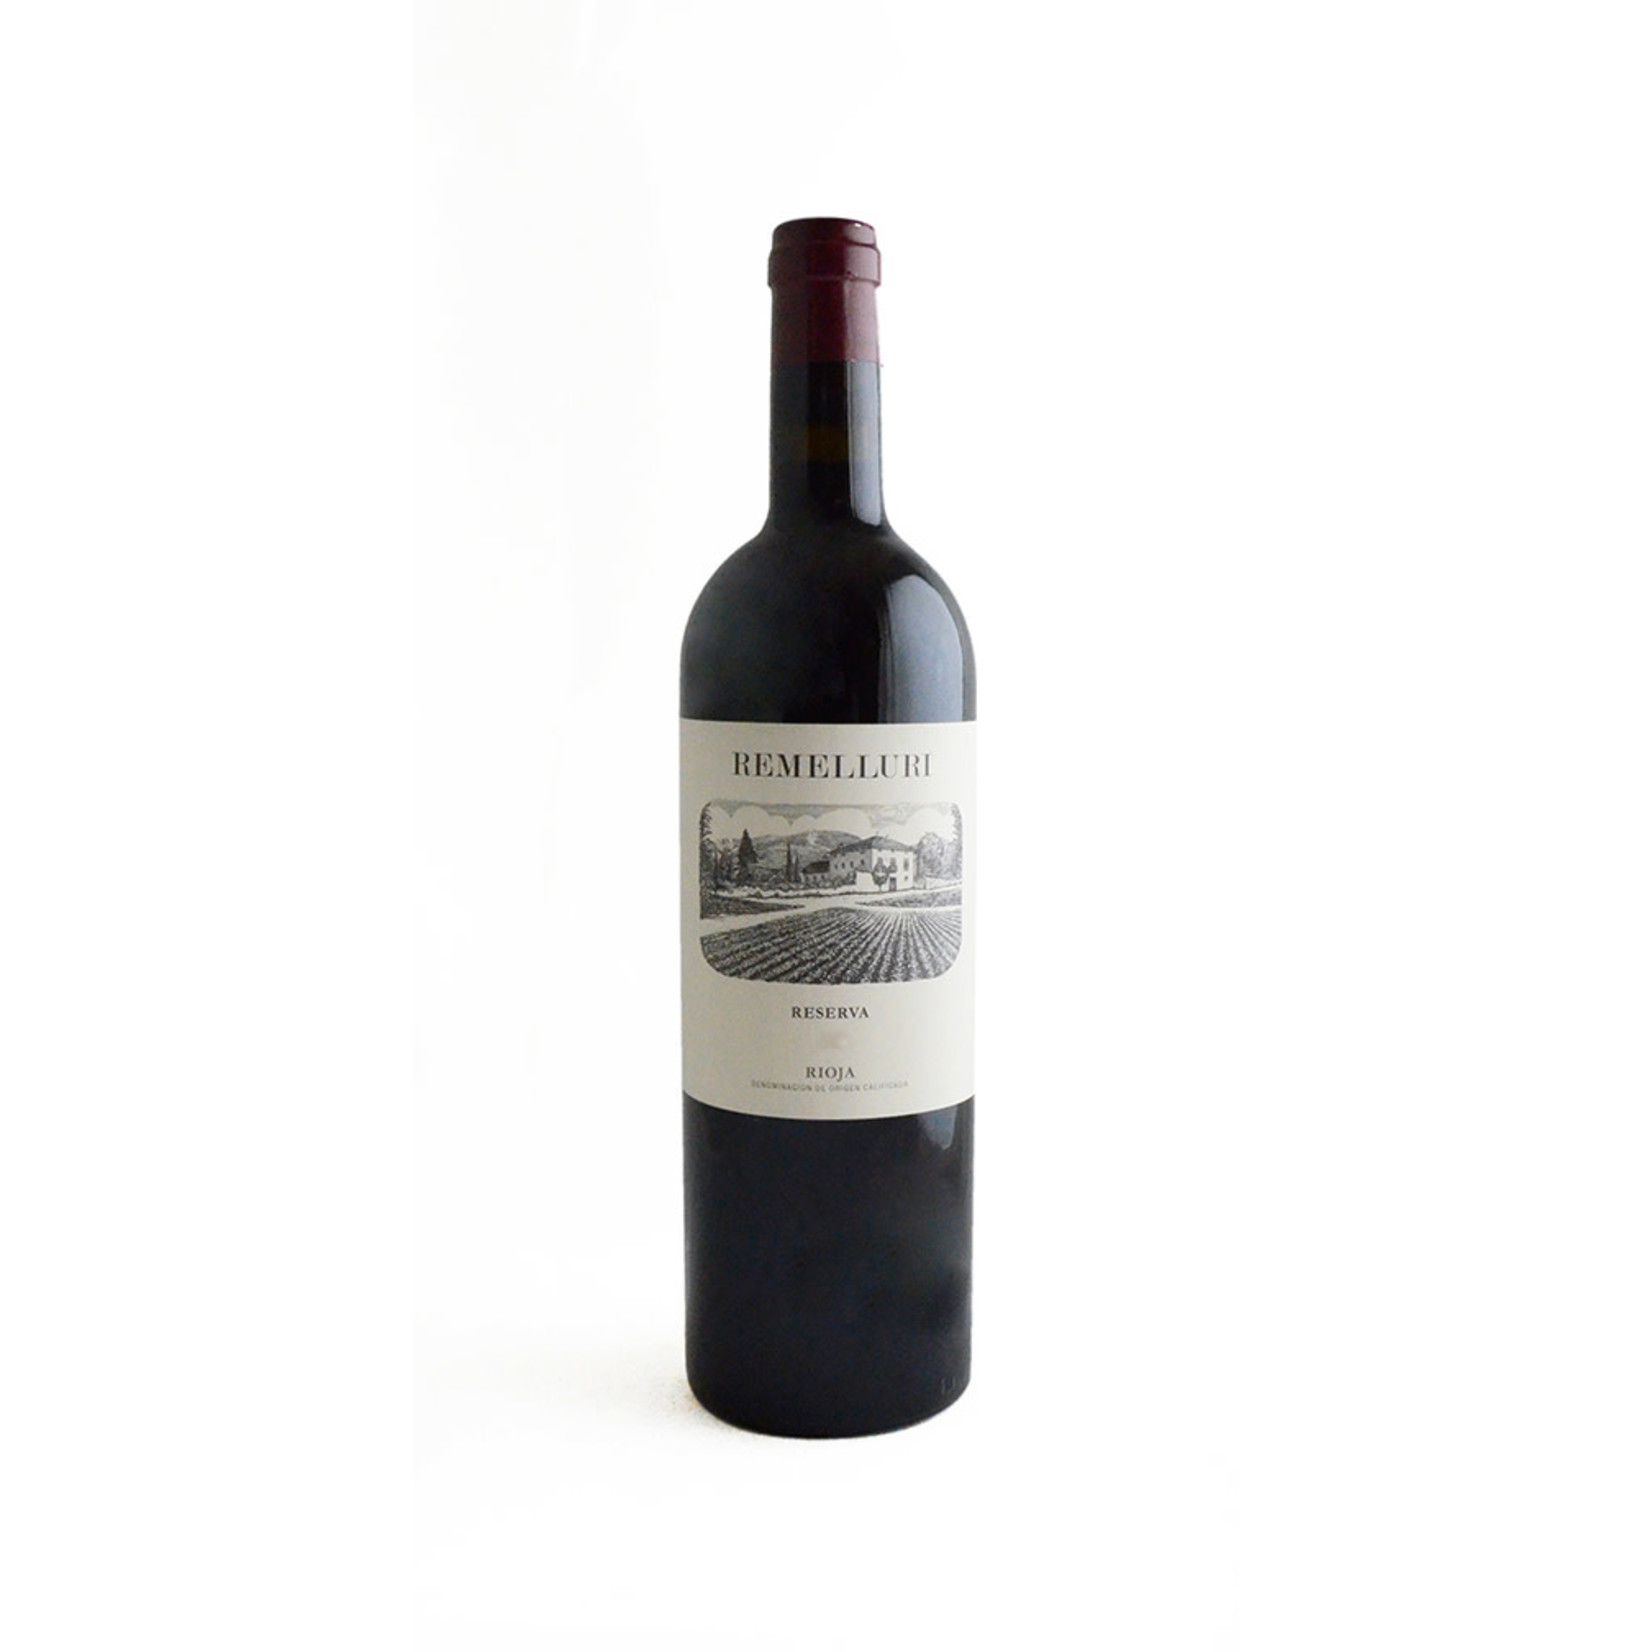 Wine La Granja Remelluri Reserva Rioja 2014